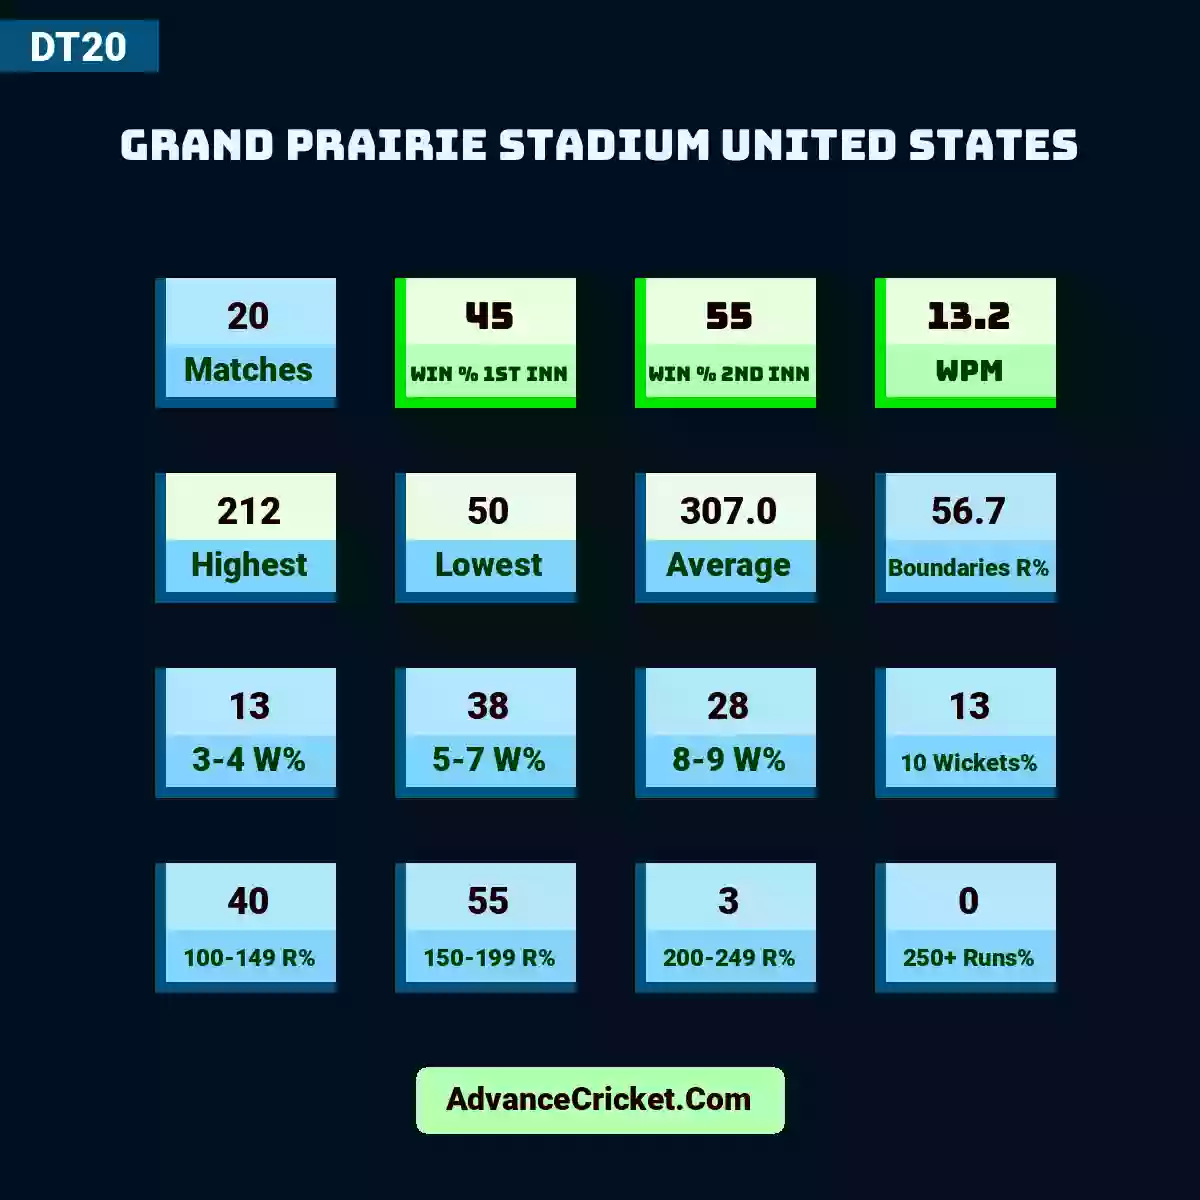 Image showing Grand Prairie Stadium United States with Matches: 20, Win % 1st Inn: 45, Win % 2nd Inn: 55, WPM: 13.2, Highest: 212, Lowest: 50, Average: 307.0, Boundaries R%: 56.7, 3-4 W%: 13, 5-7 W%: 38, 8-9 W%: 28, 10 Wickets%: 13, 100-149 R%: 40, 150-199 R%: 55, 200-249 R%: 3, 250+ Runs%: 0.